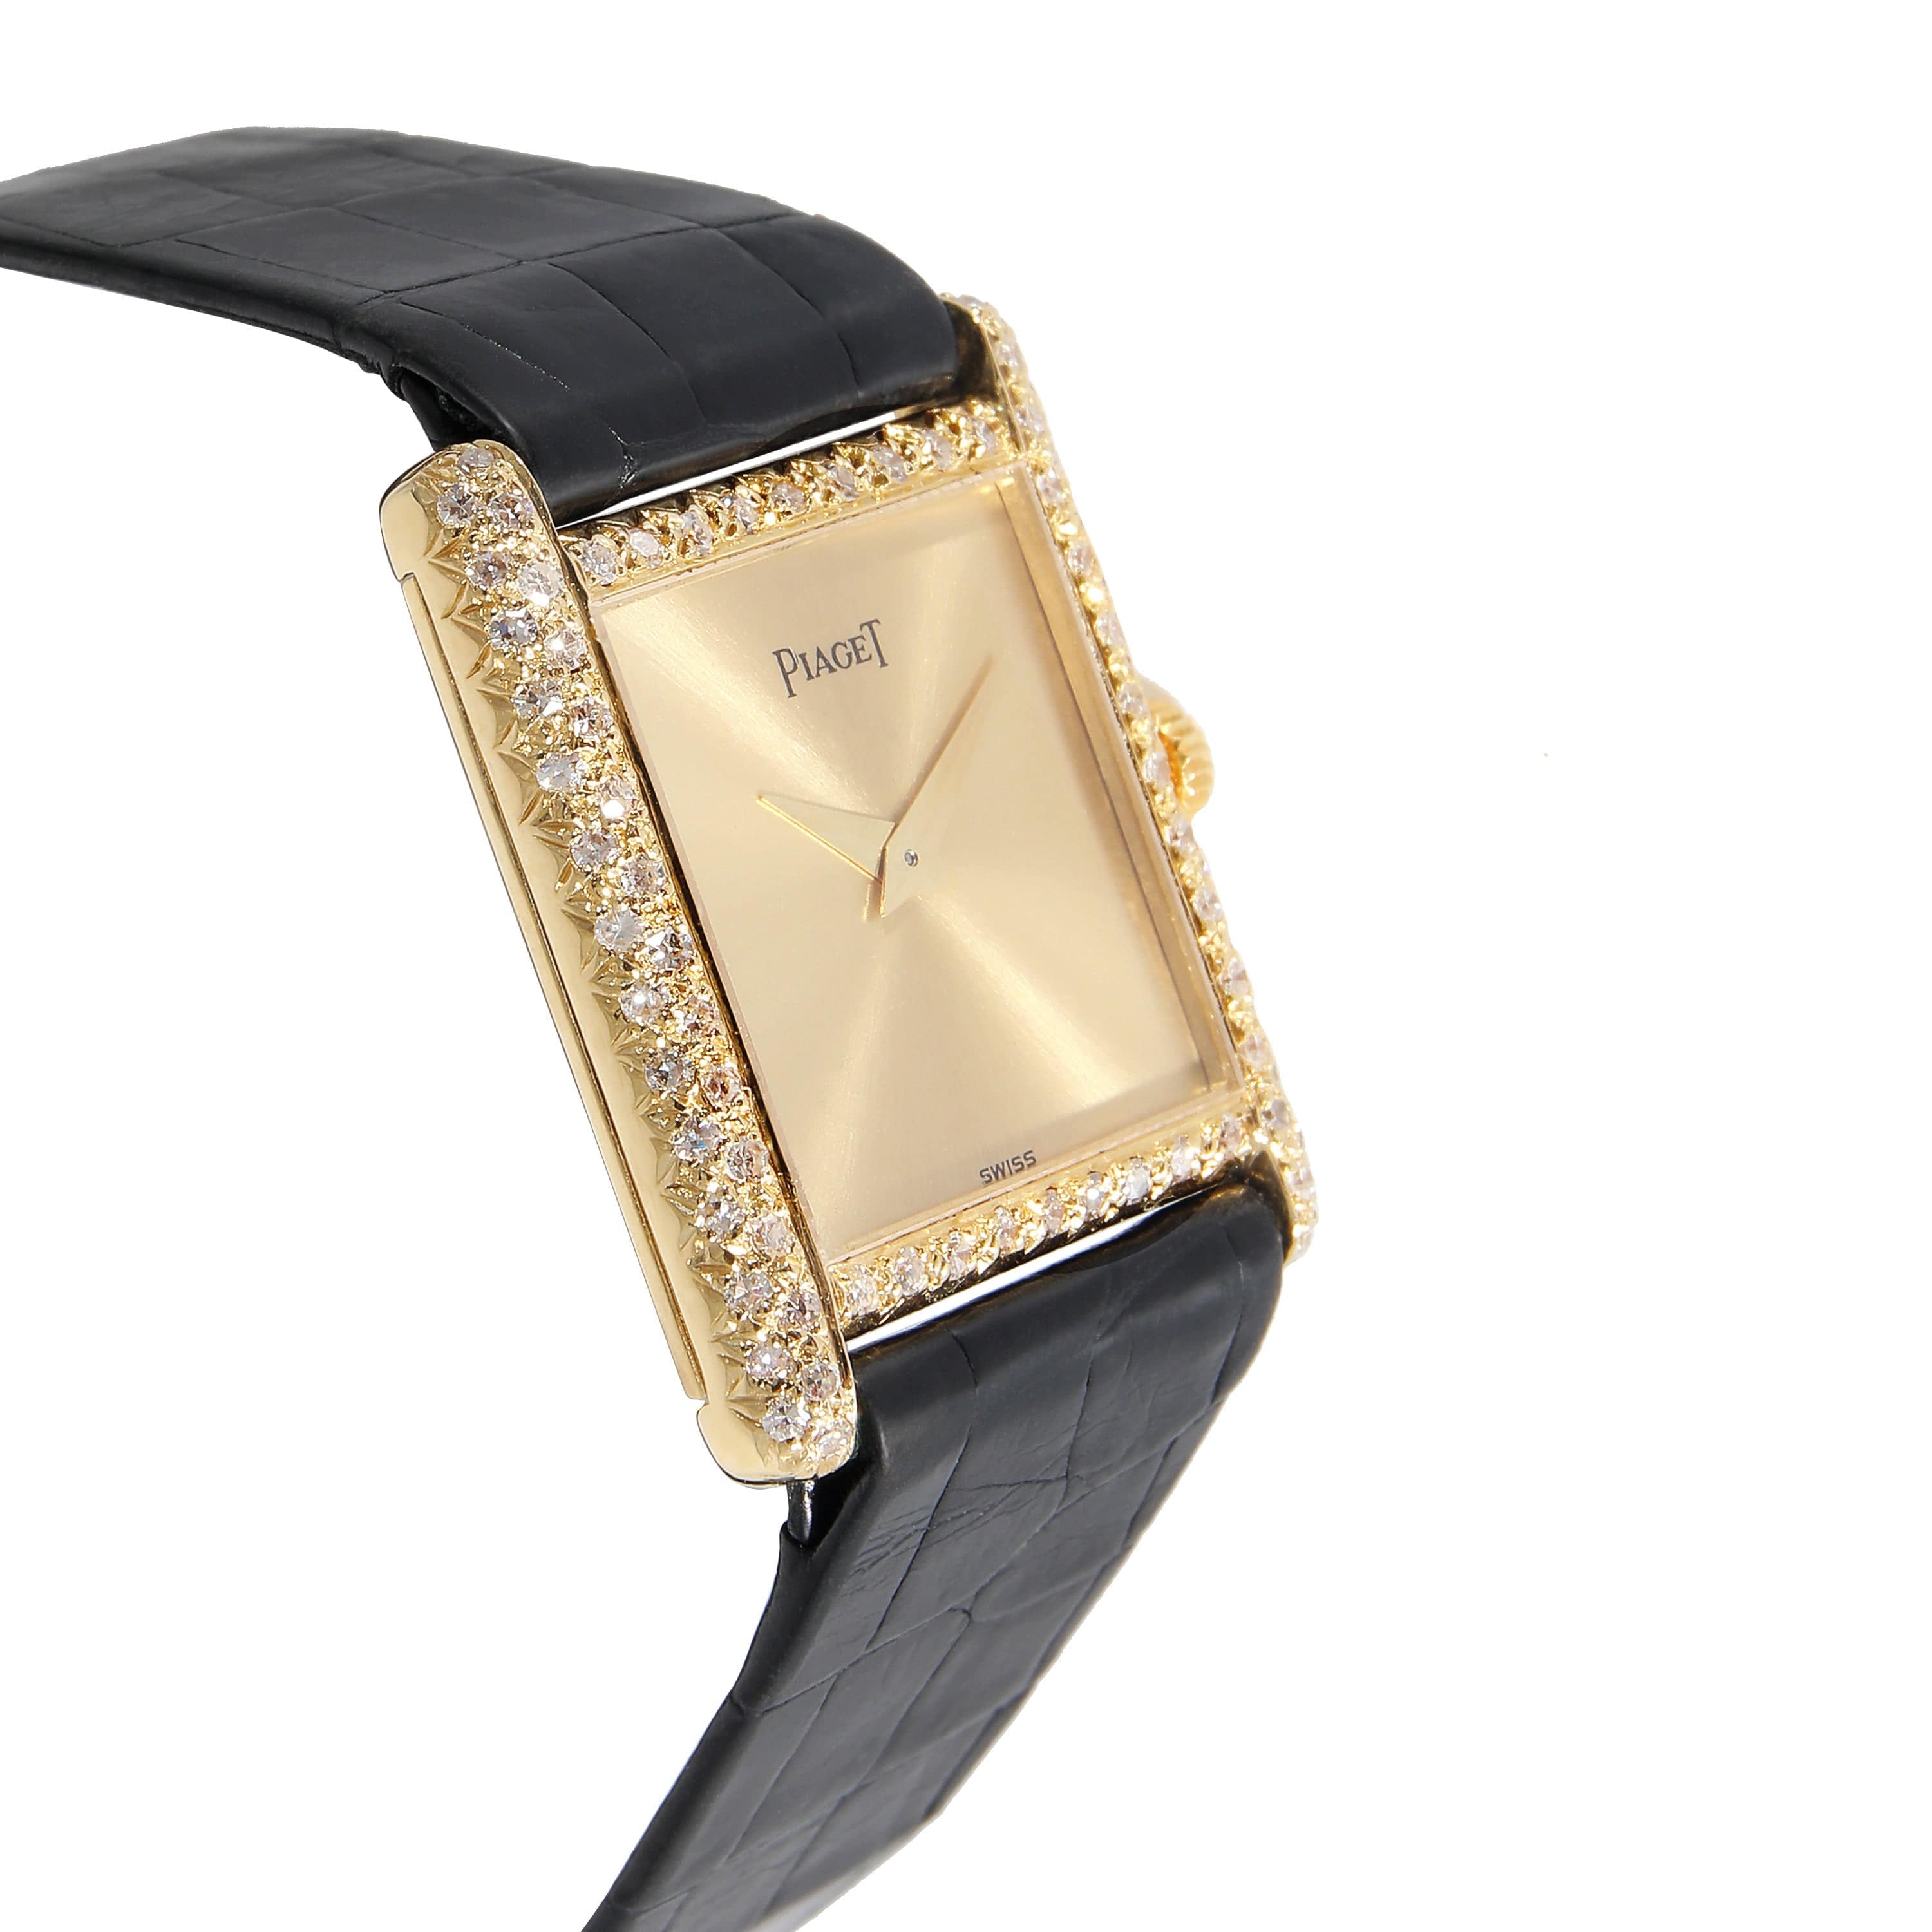 Piaget Piaget Classique 40825 Women's Watch in 18kt Yellow Gold